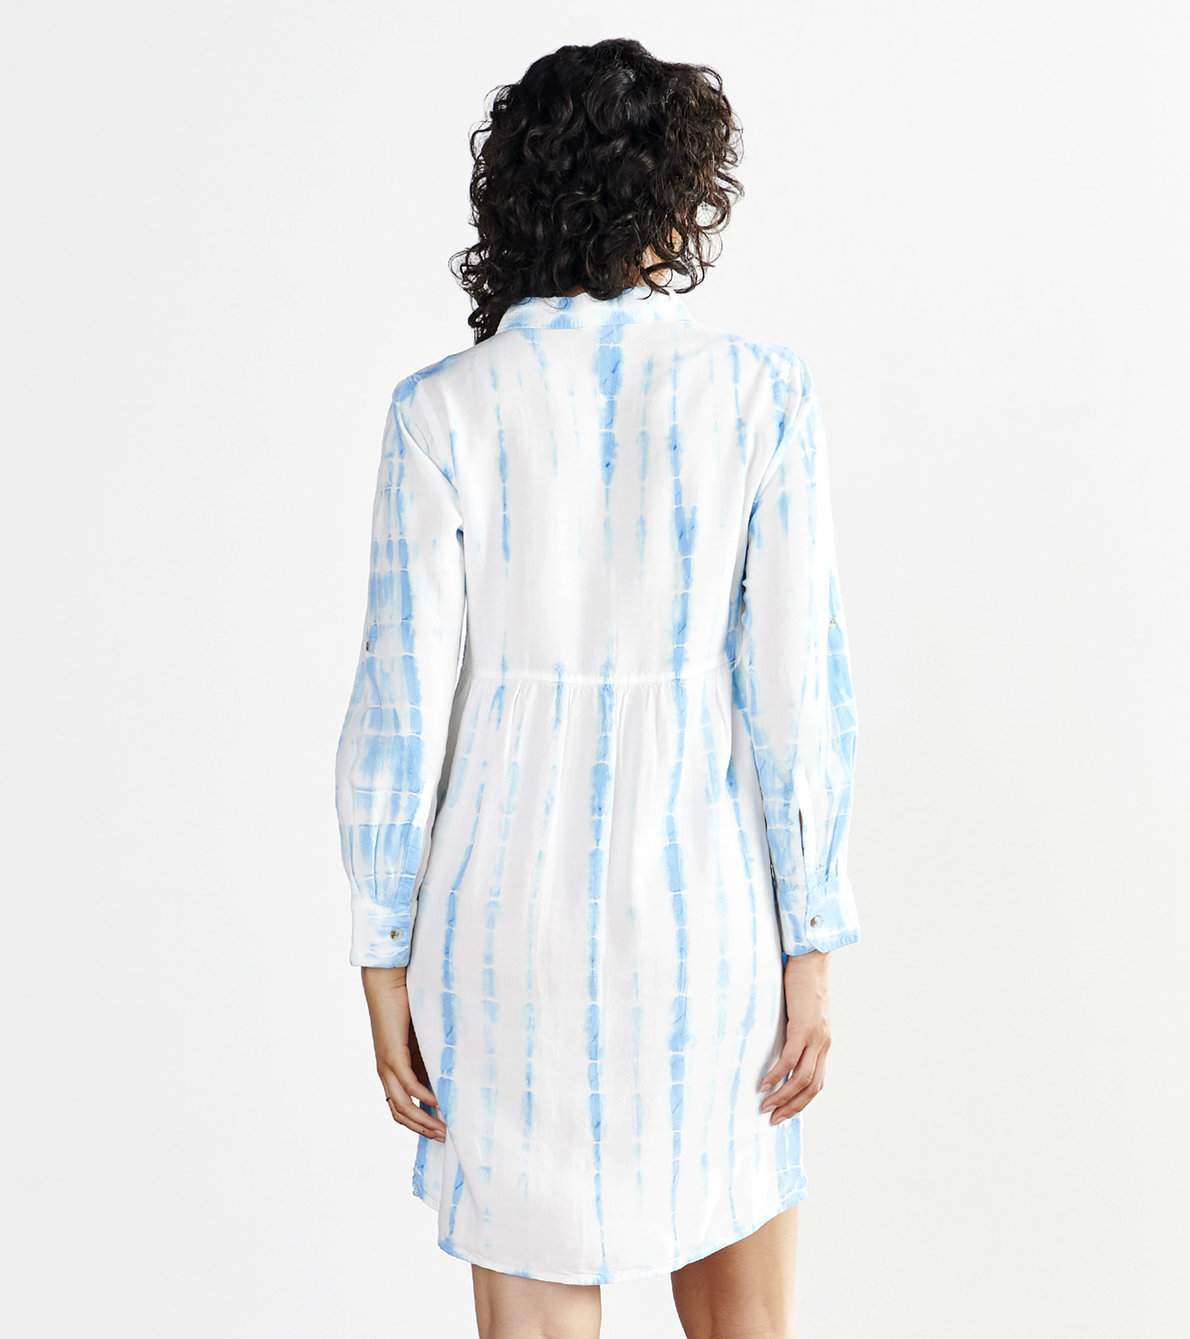 View larger image of Cara Shirt Dress - Tie Dye Stripes